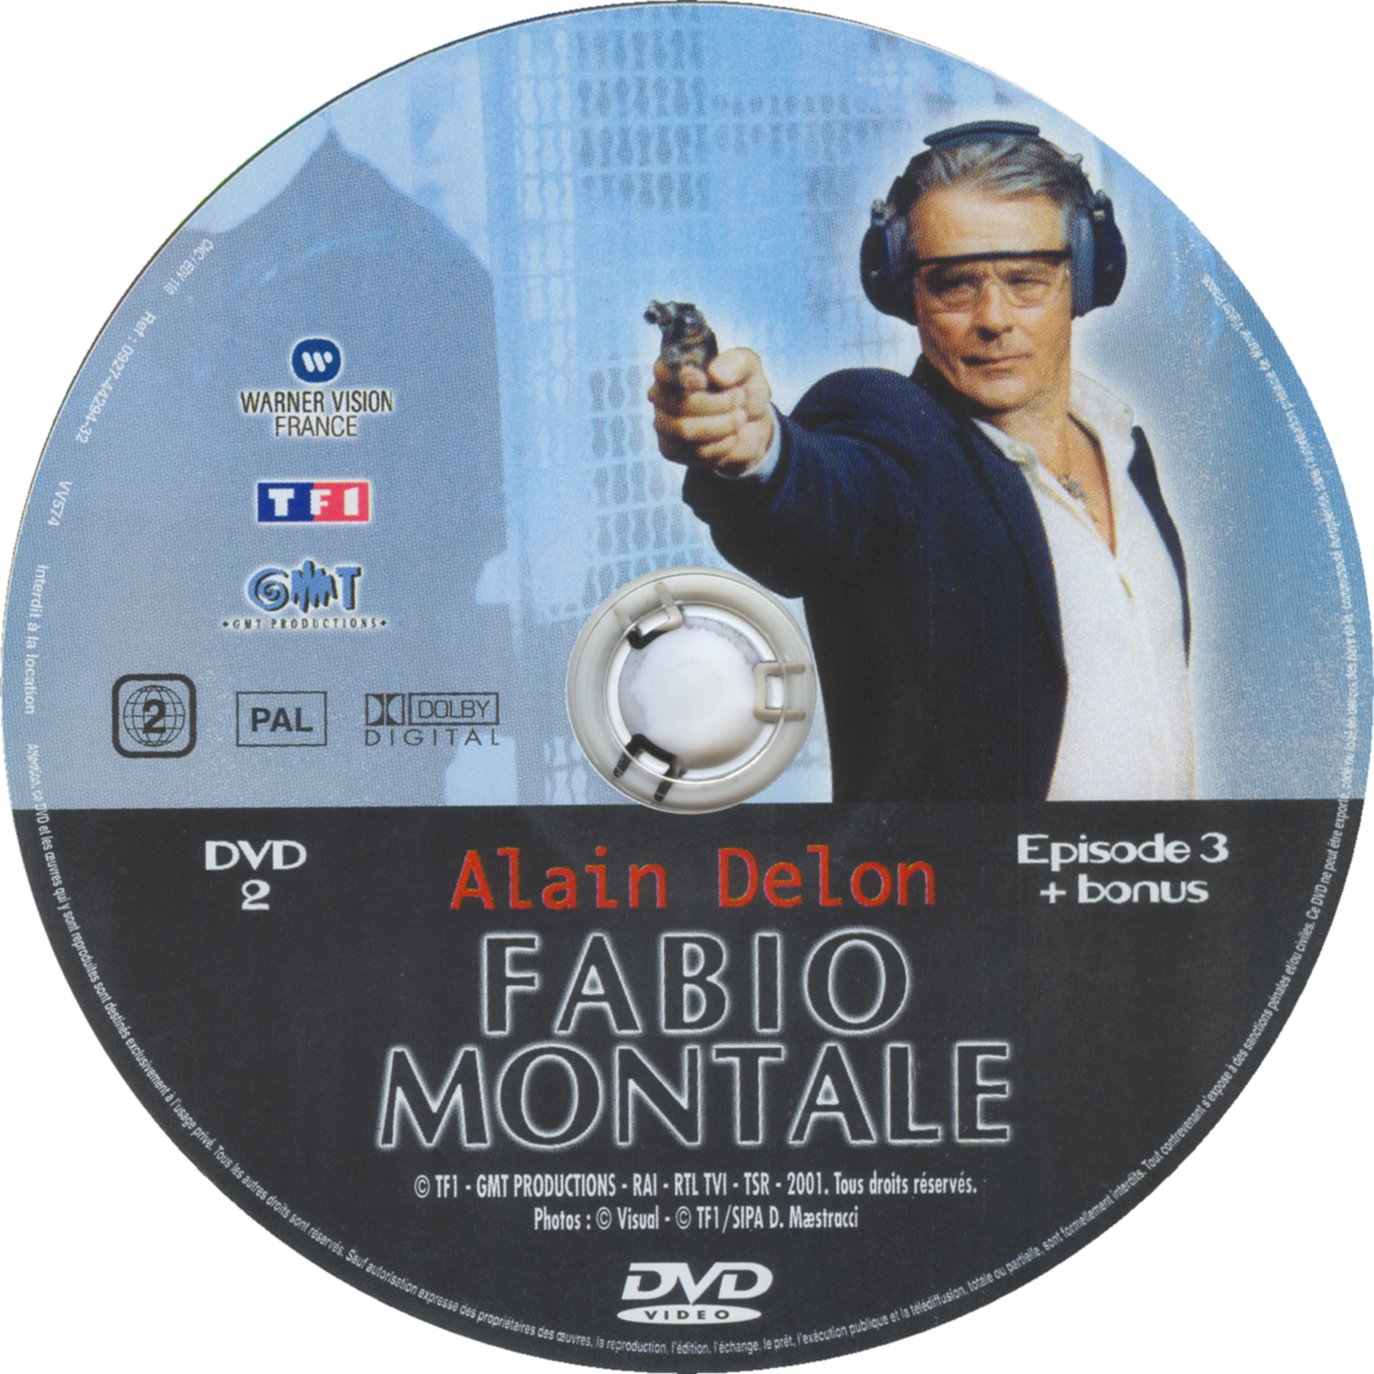 Fabio Montale DVD 2